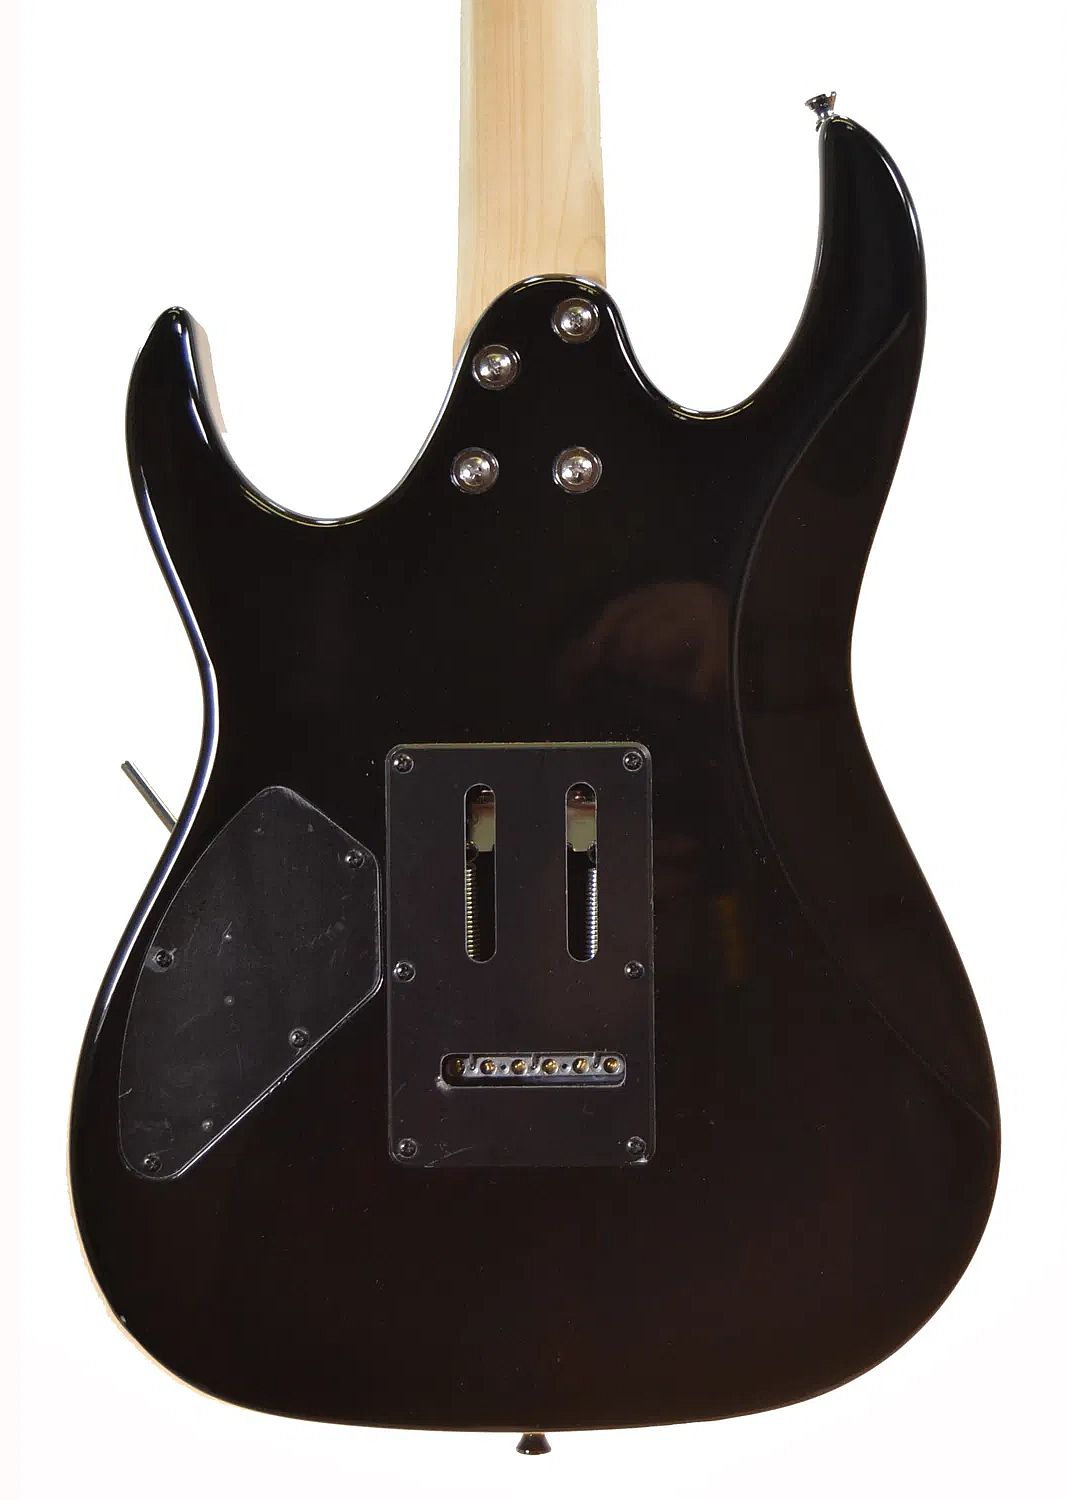 Ibanez Gio GRX70QA Electric Guitar - Transparent Violet Sunburst